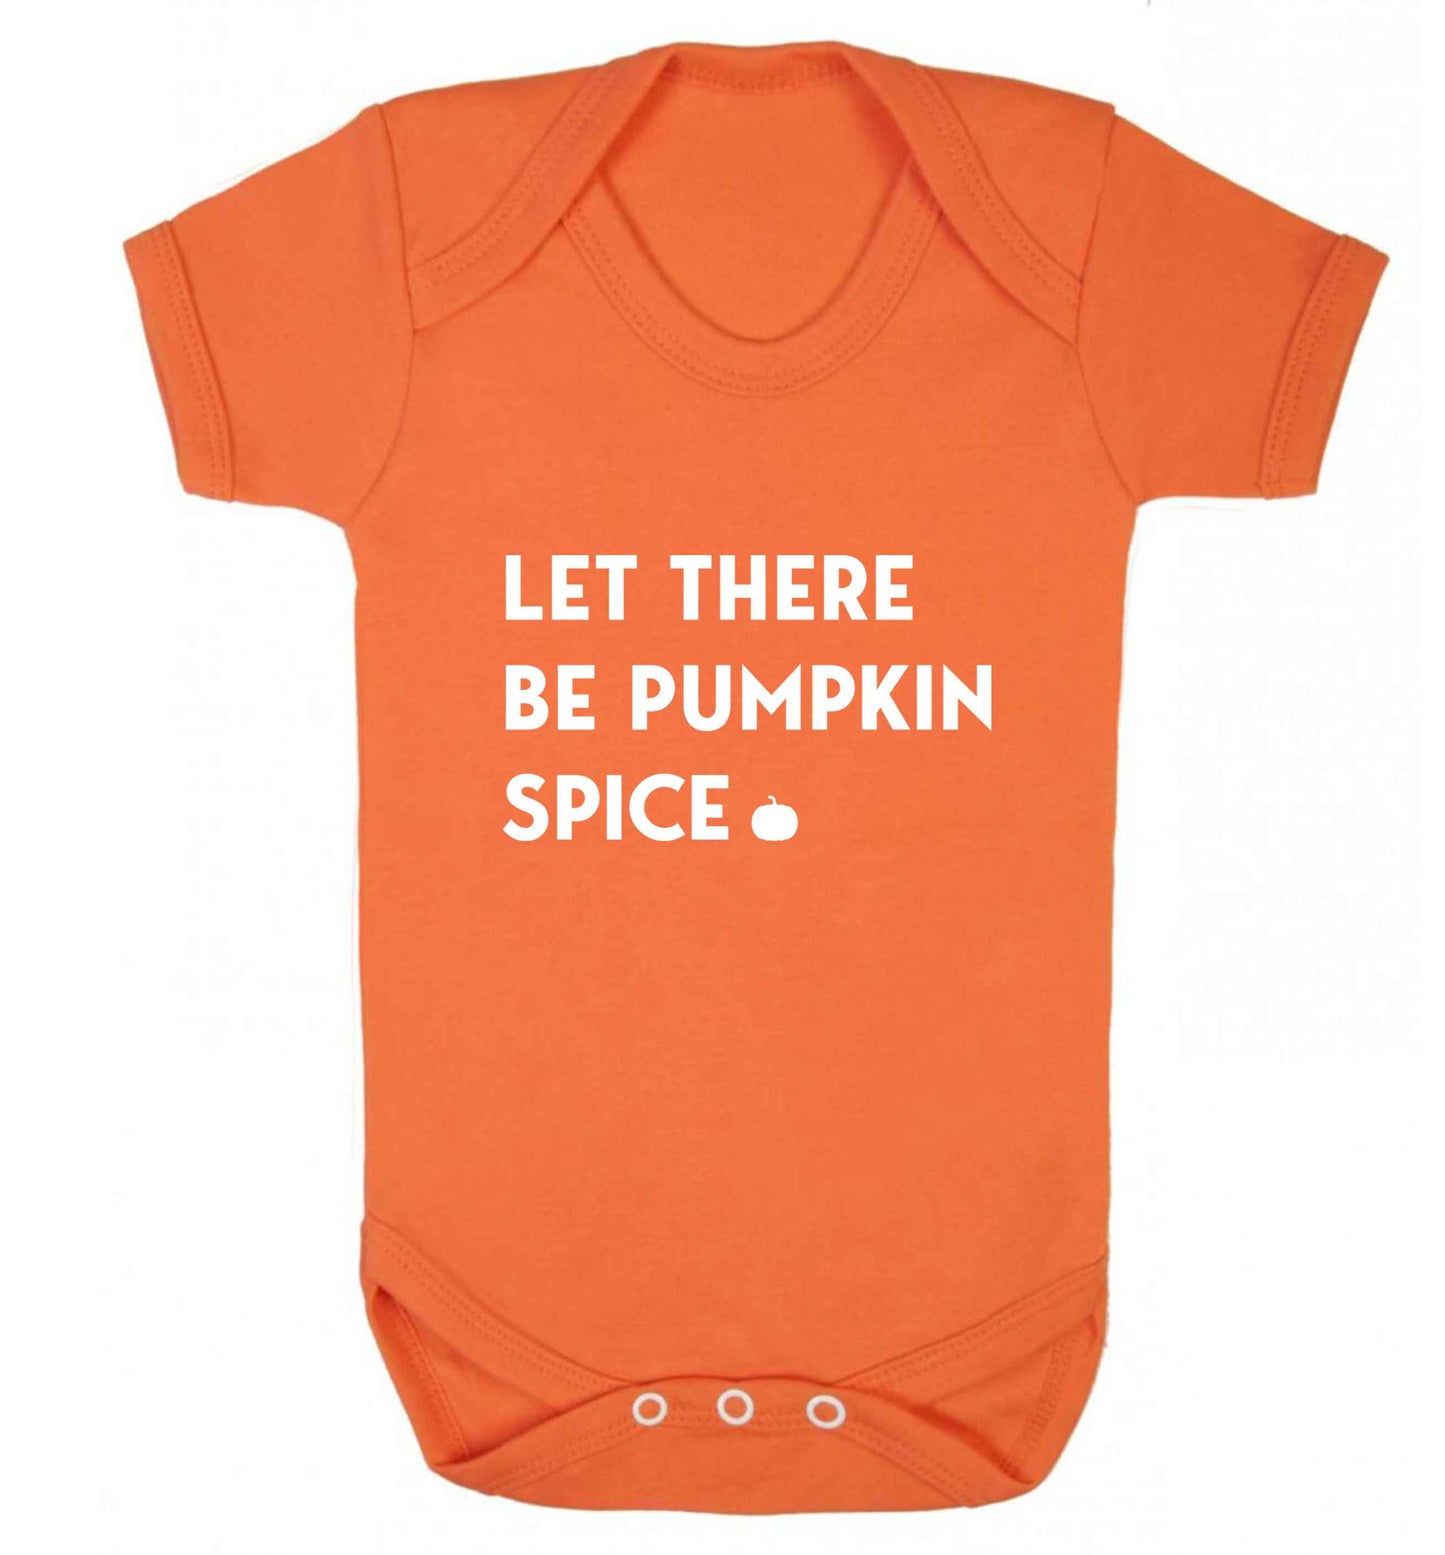 Let Be Pumpkin Spice baby vest orange 18-24 months